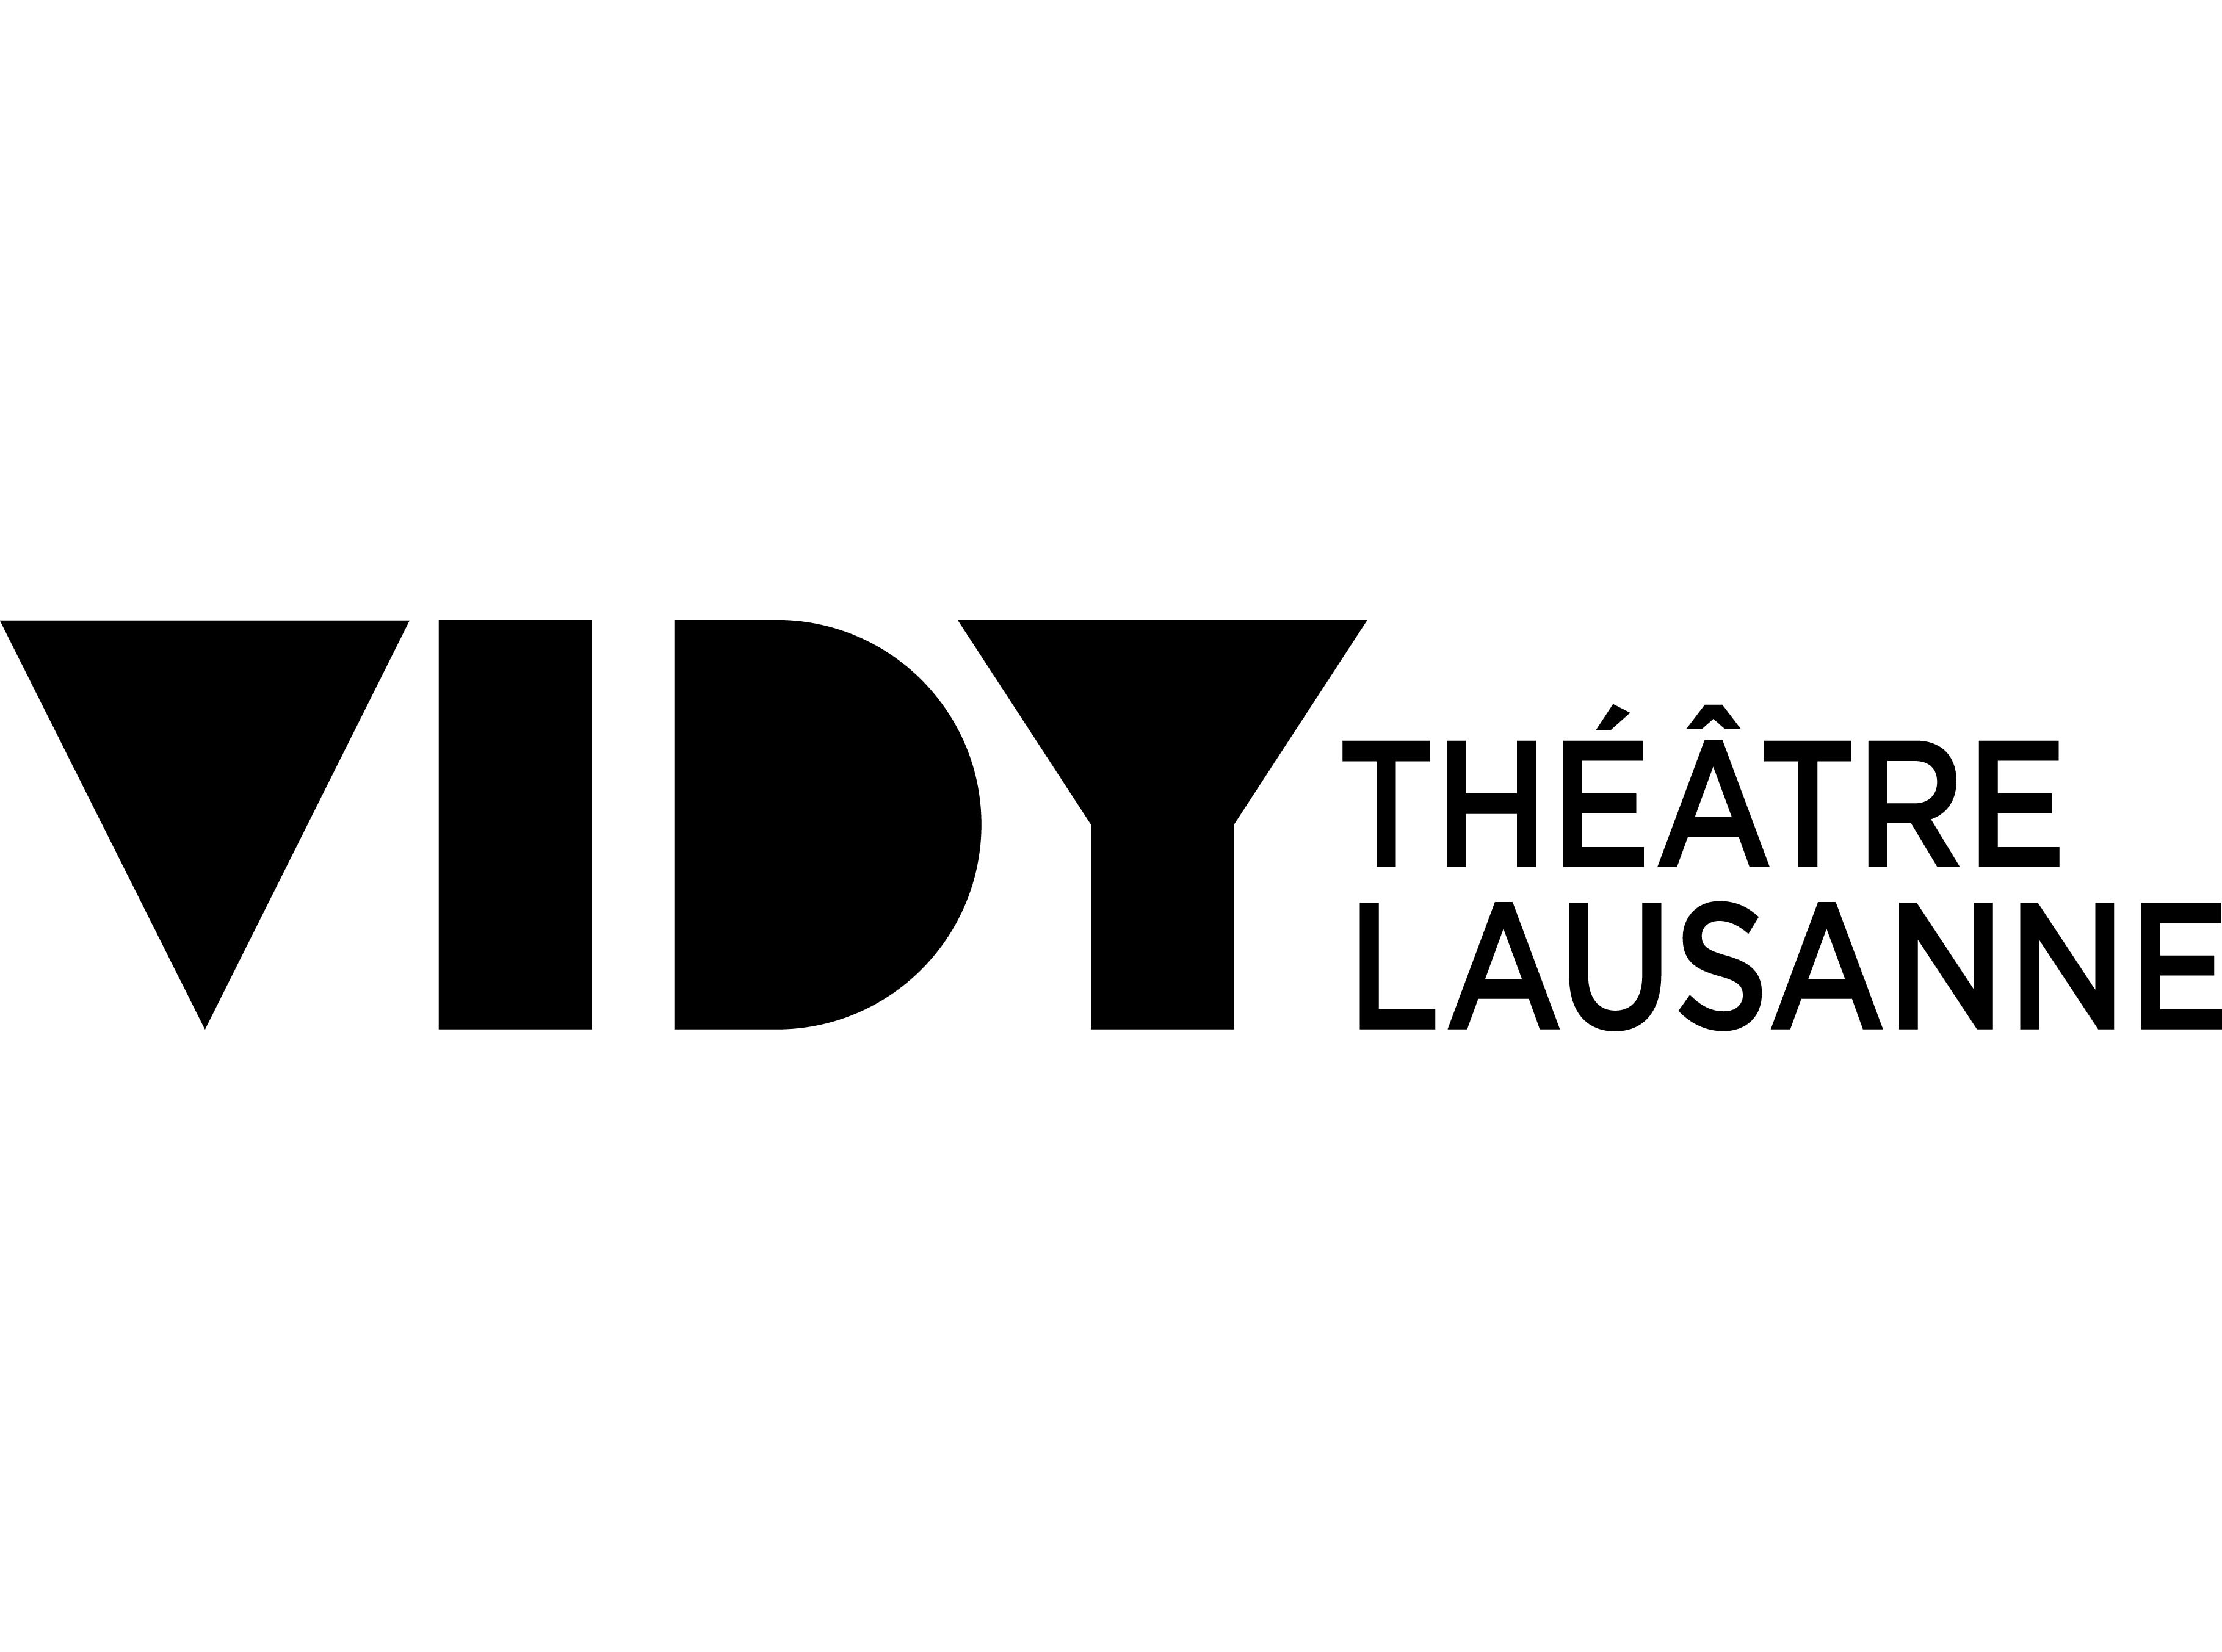 Theatre Vidy